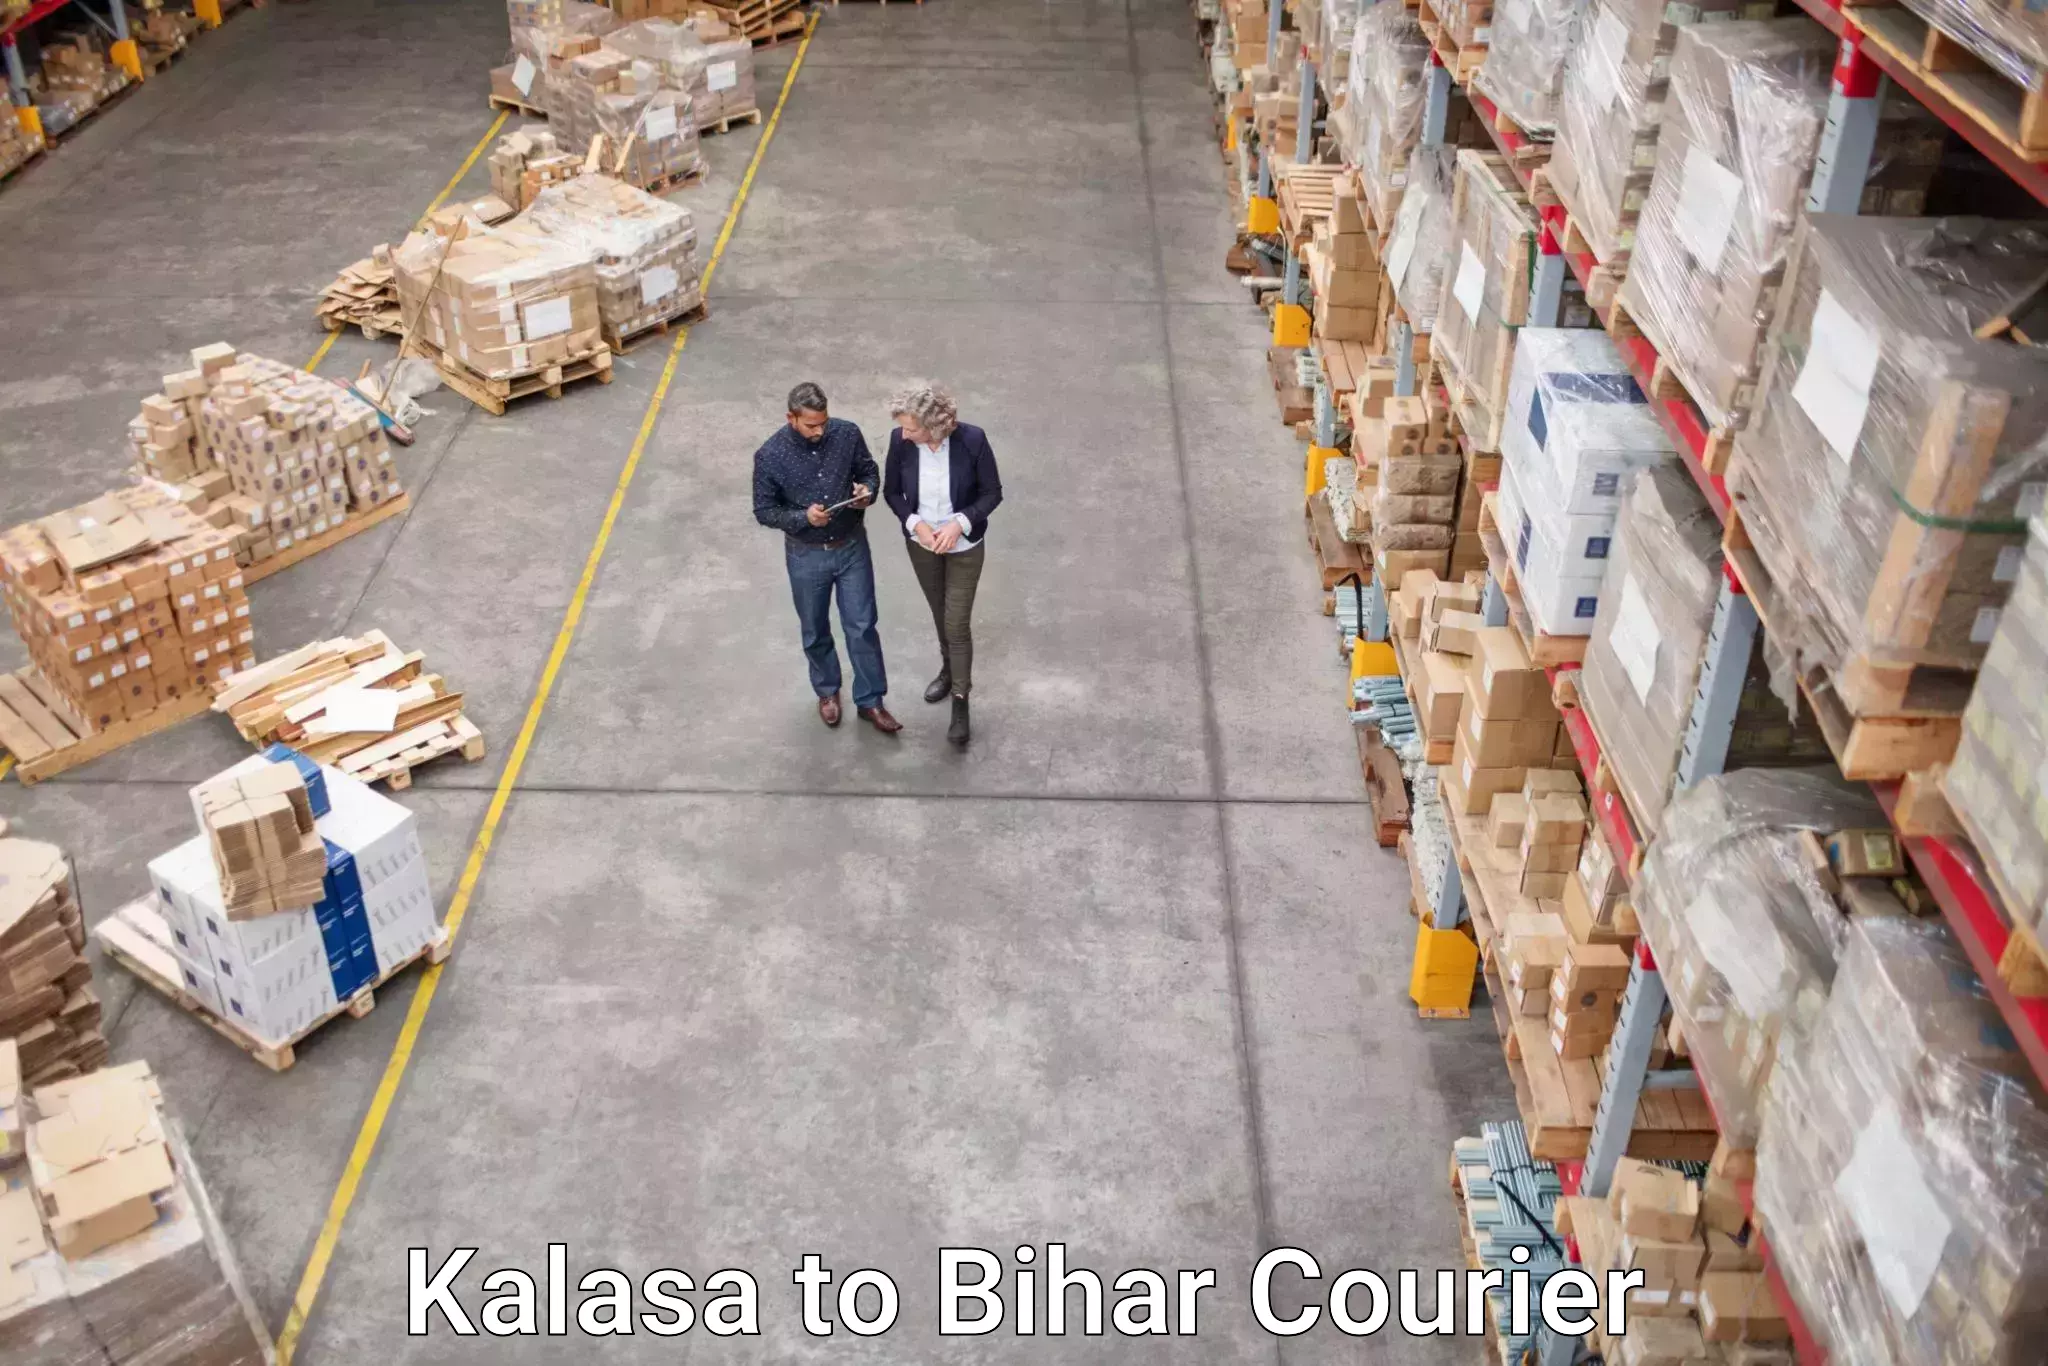 Comprehensive delivery network Kalasa to Bihta